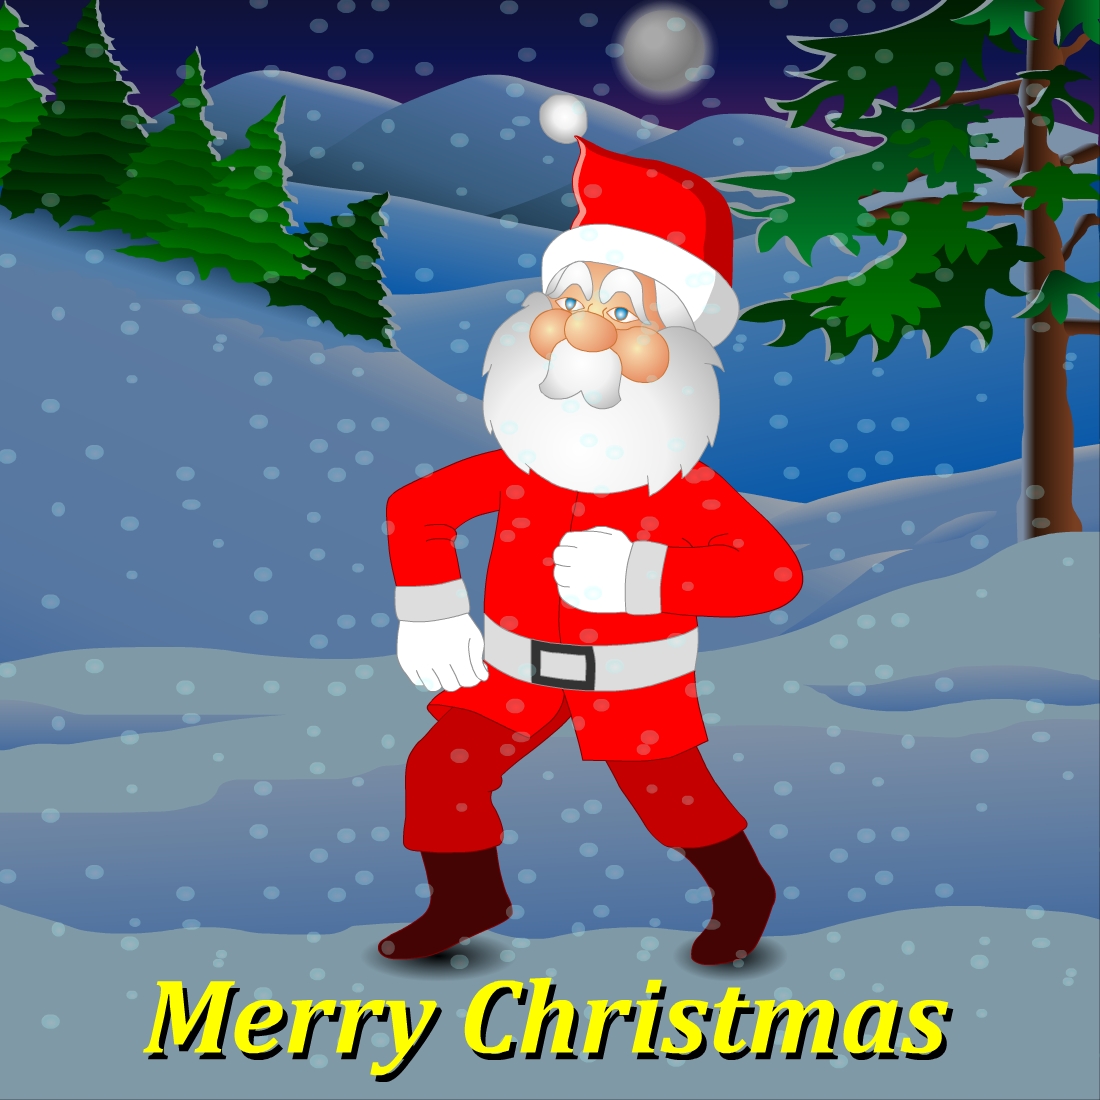 Merry Christmas Santa Dancing Illustrations preview image.